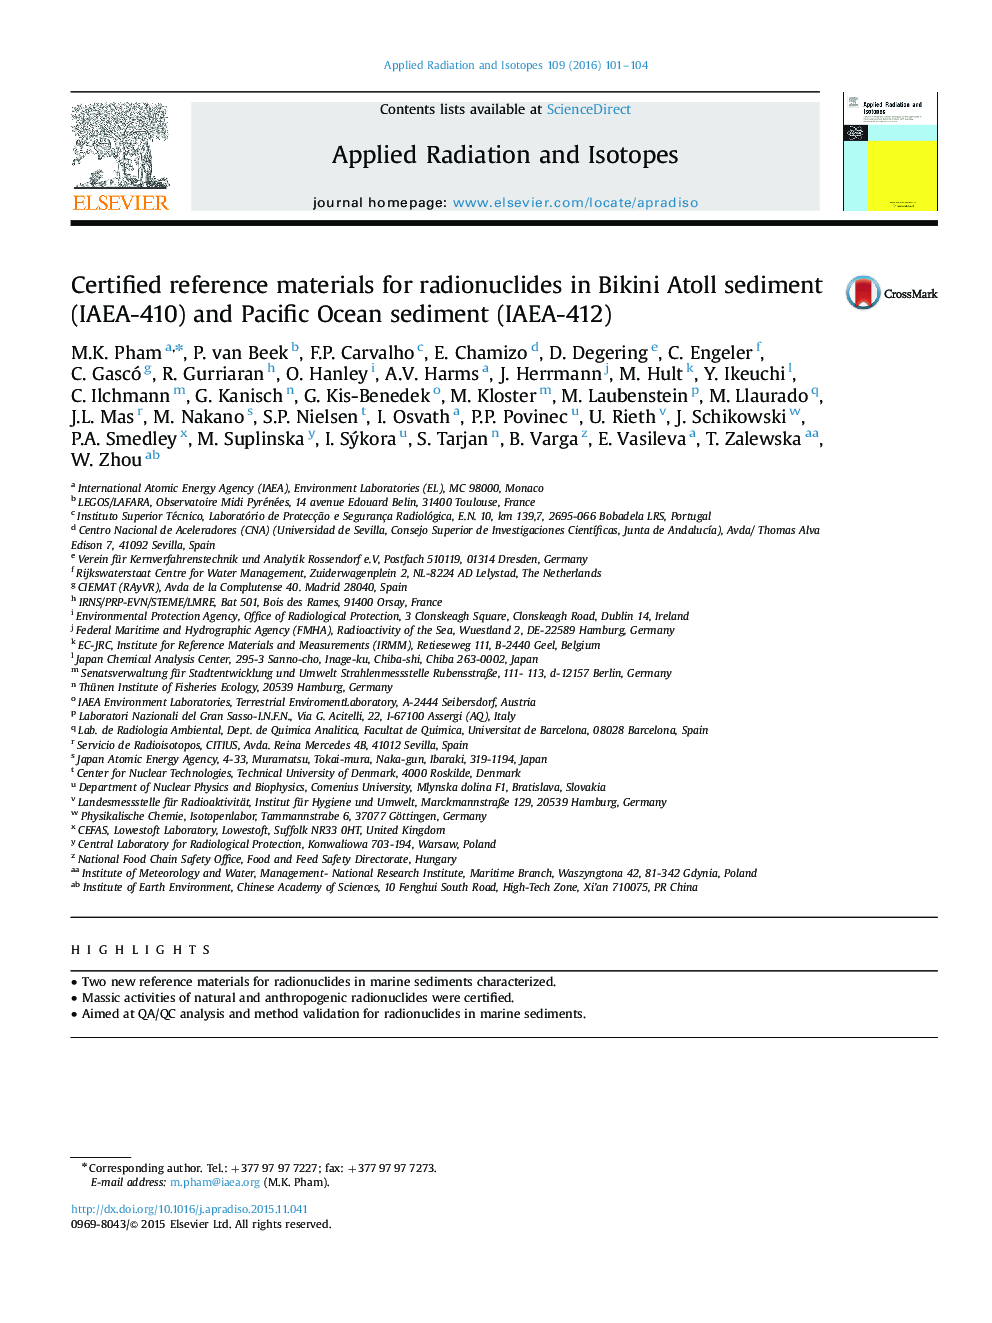 Certified reference materials for radionuclides in Bikini Atoll sediment (IAEA-410) and Pacific Ocean sediment (IAEA-412)